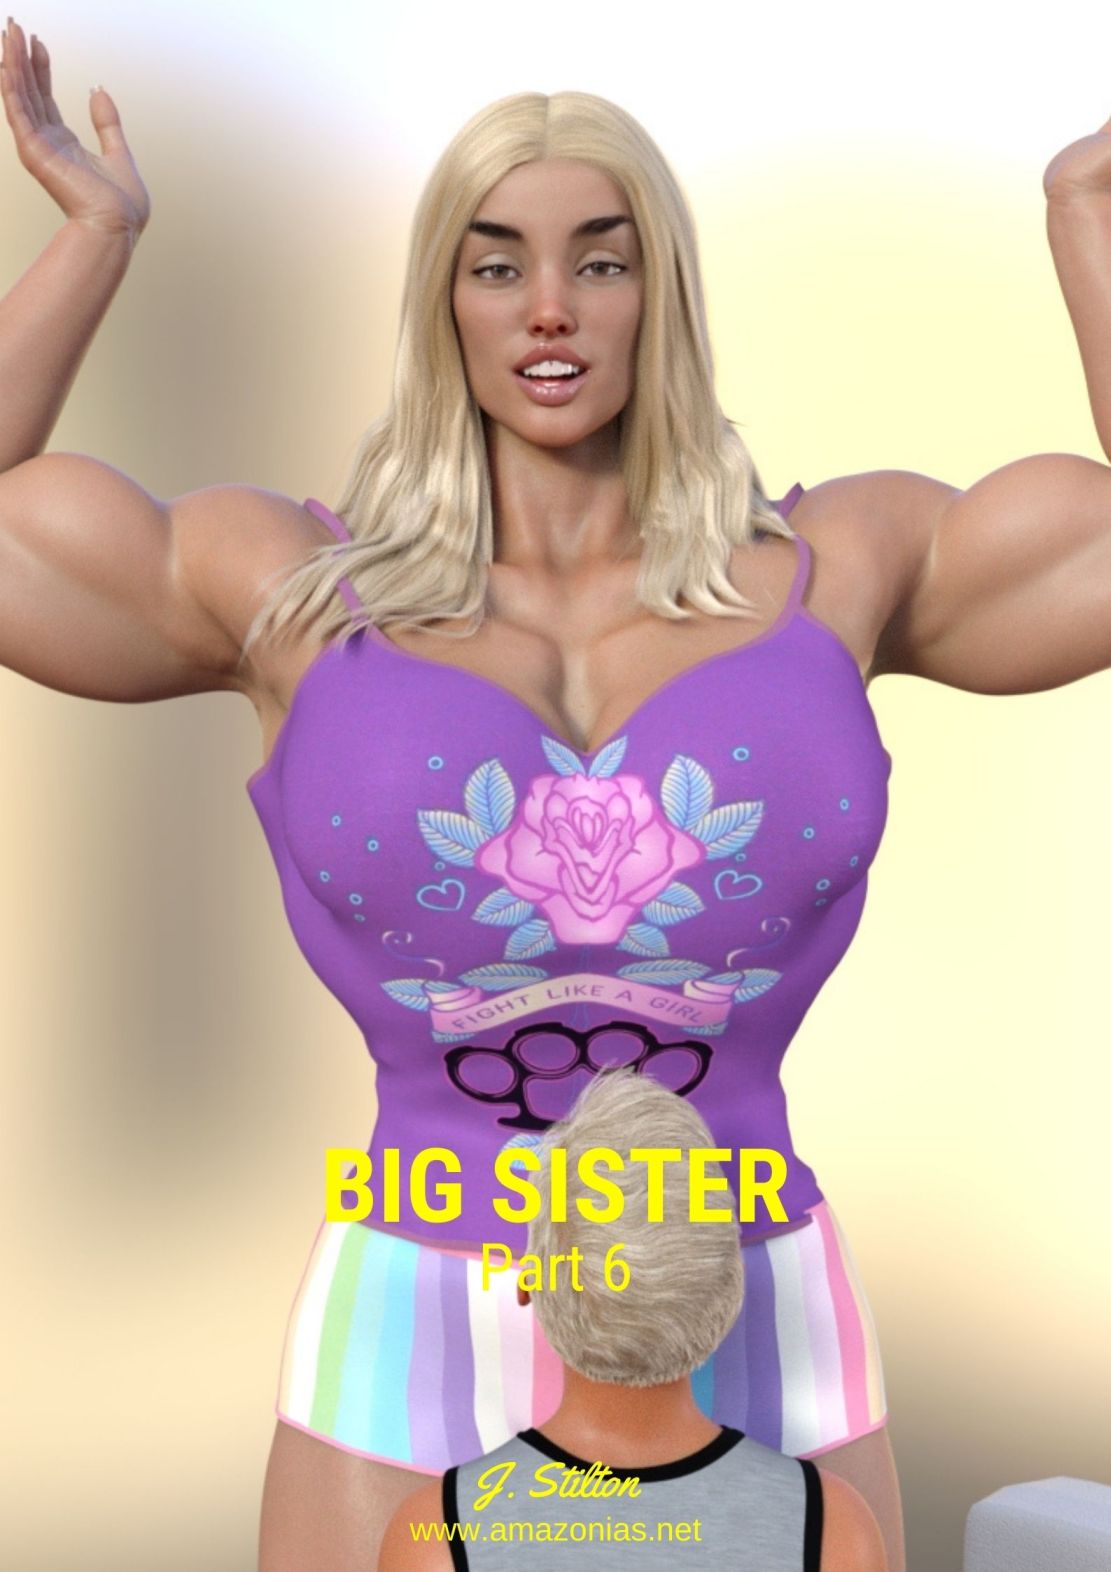 huge female bodybuilder towering over her brother